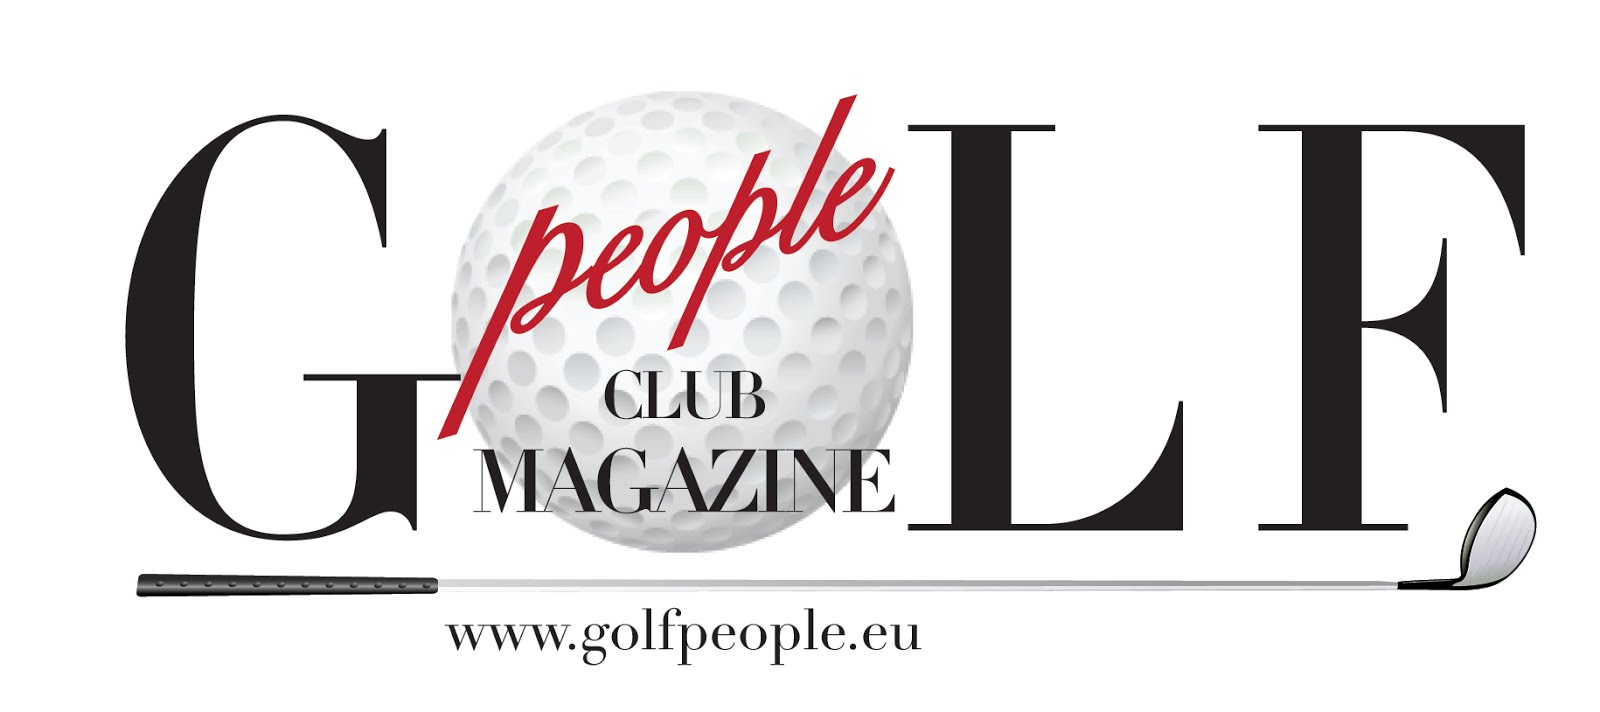 Golf People